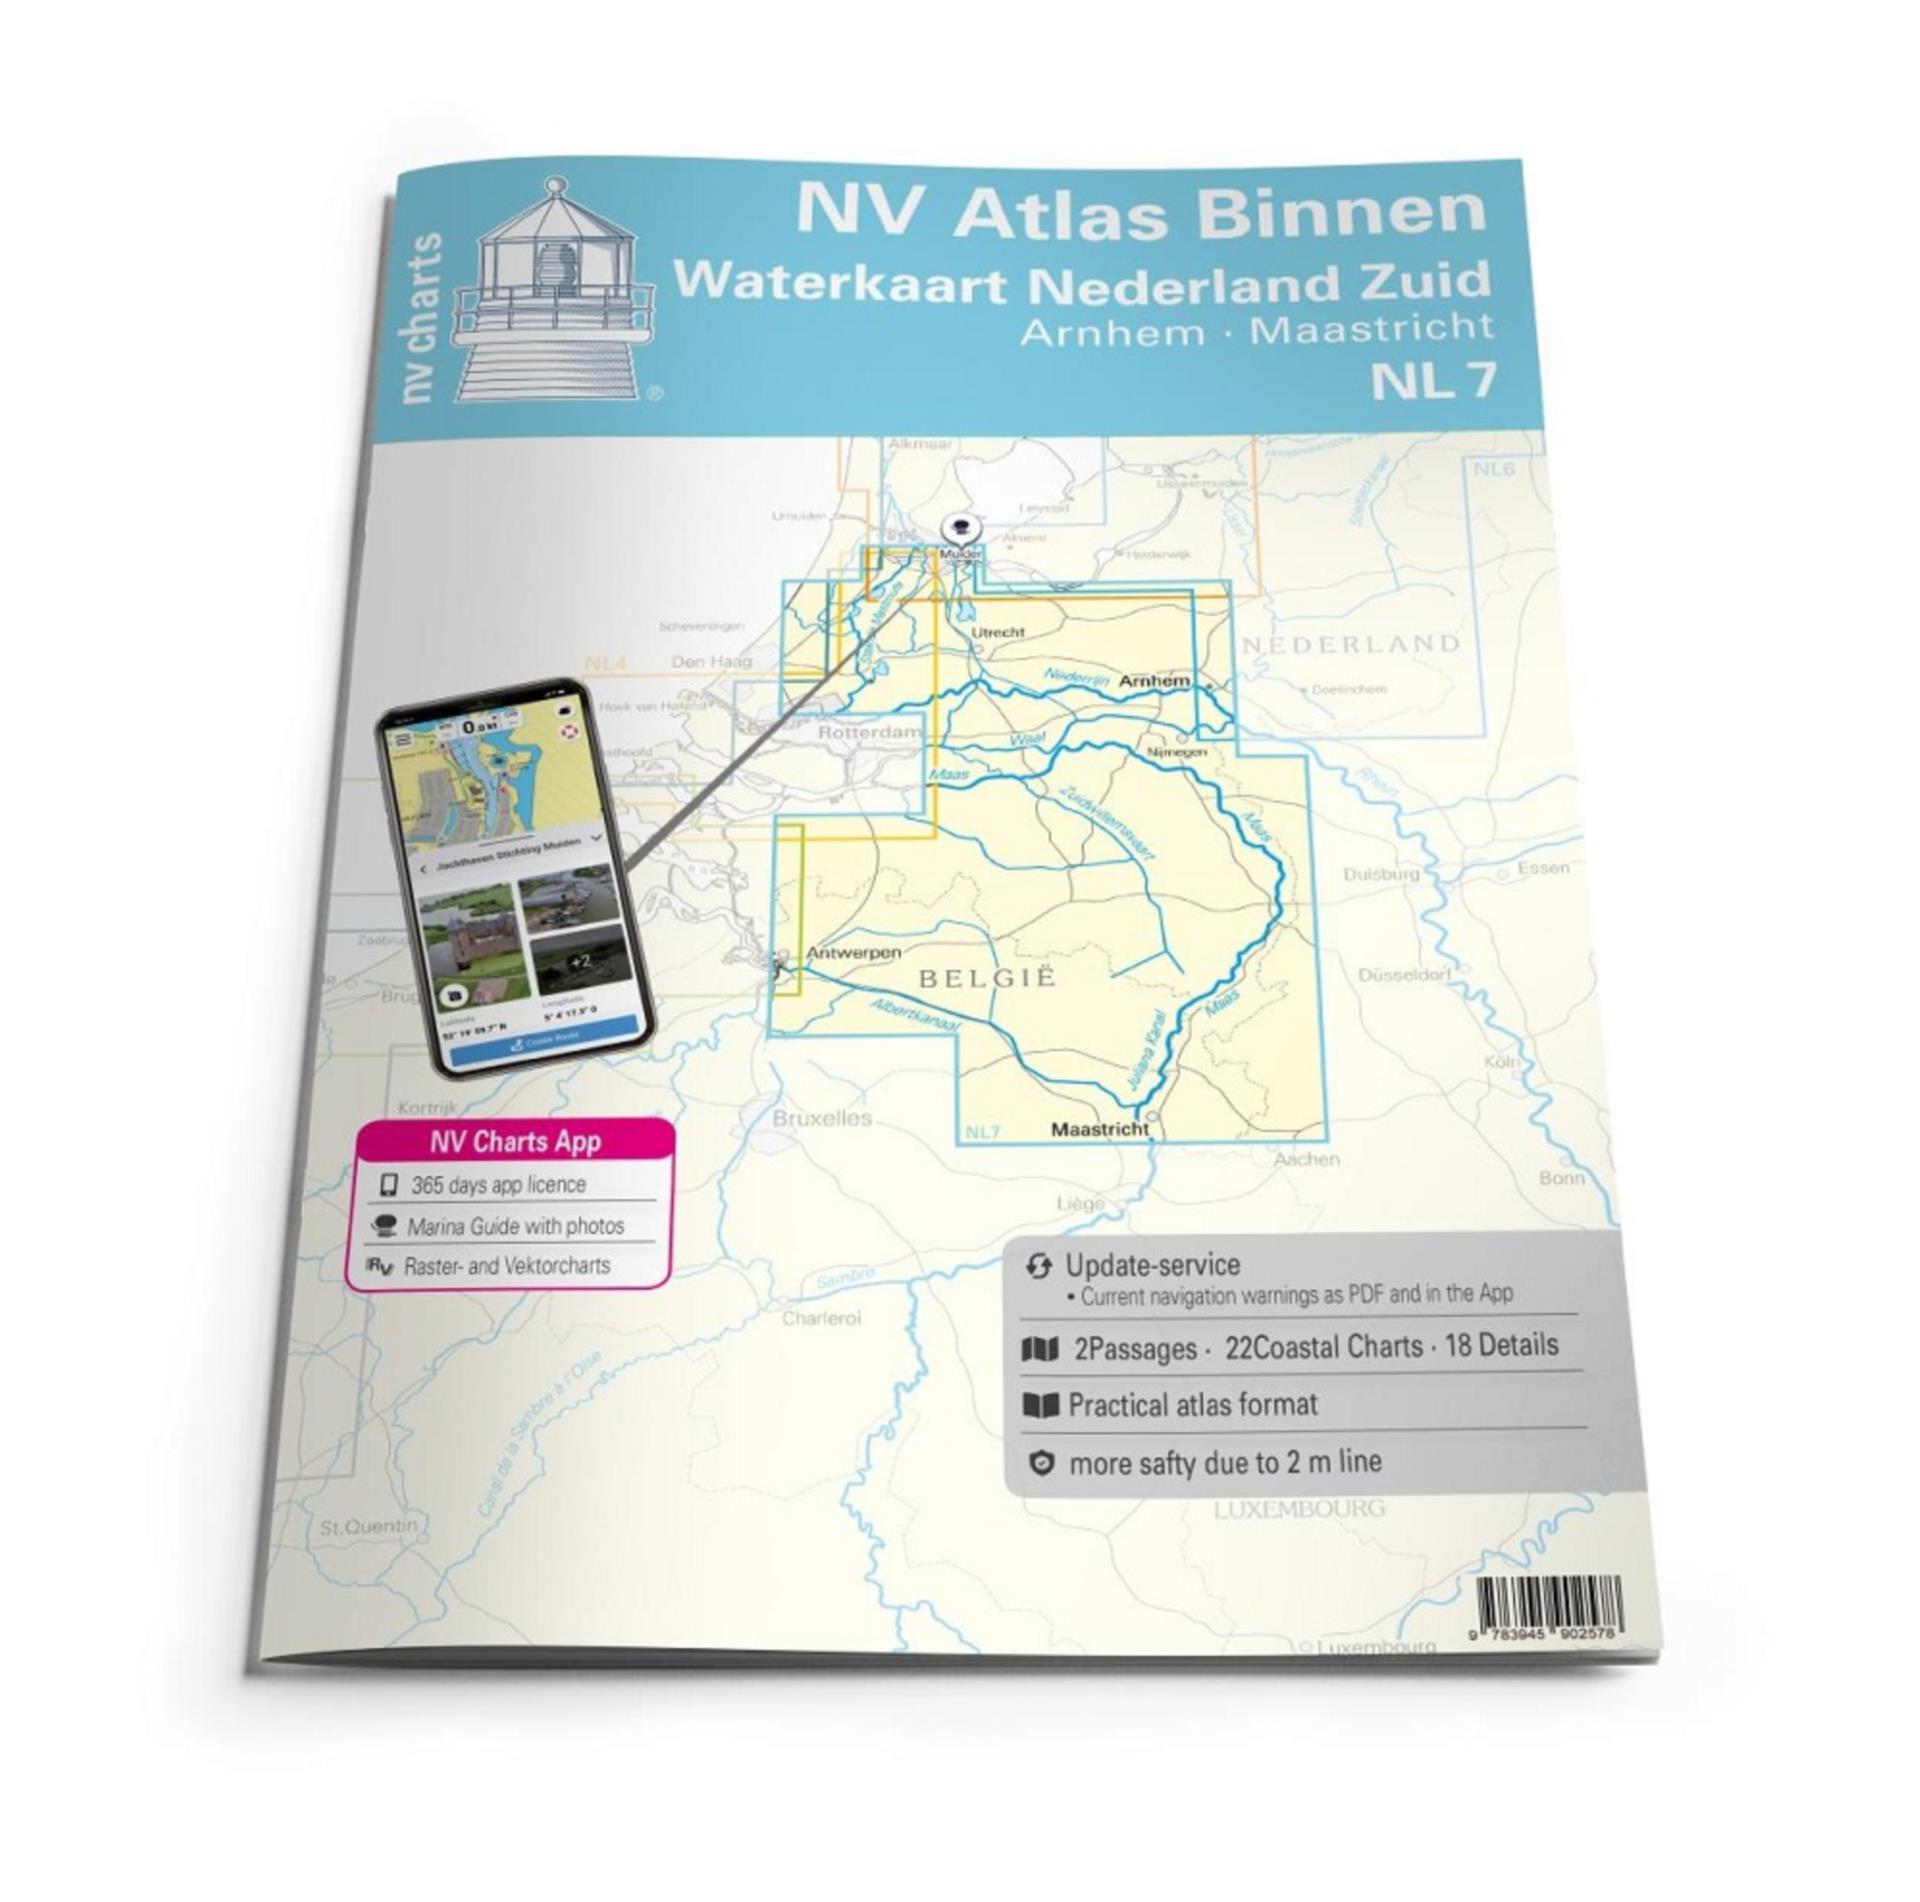 NV Atlas Niederlande NL7 - Waterkaart Nederland Zuid - Arnhem